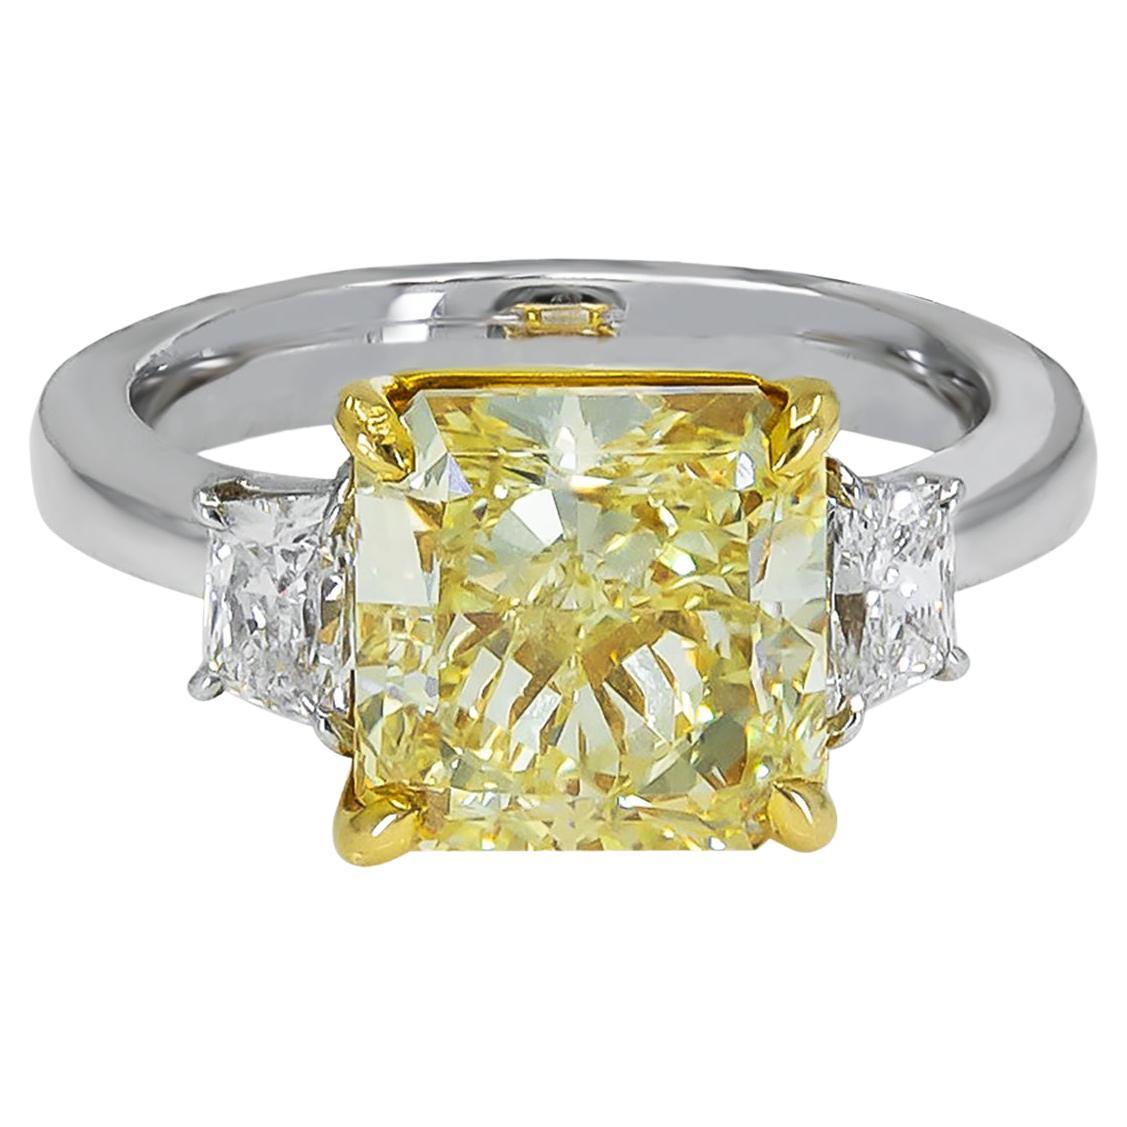 Spectra Fine Jewelry GIA Certified 5.05 Carat Fancy Intense Yellow Diamond Ring For Sale